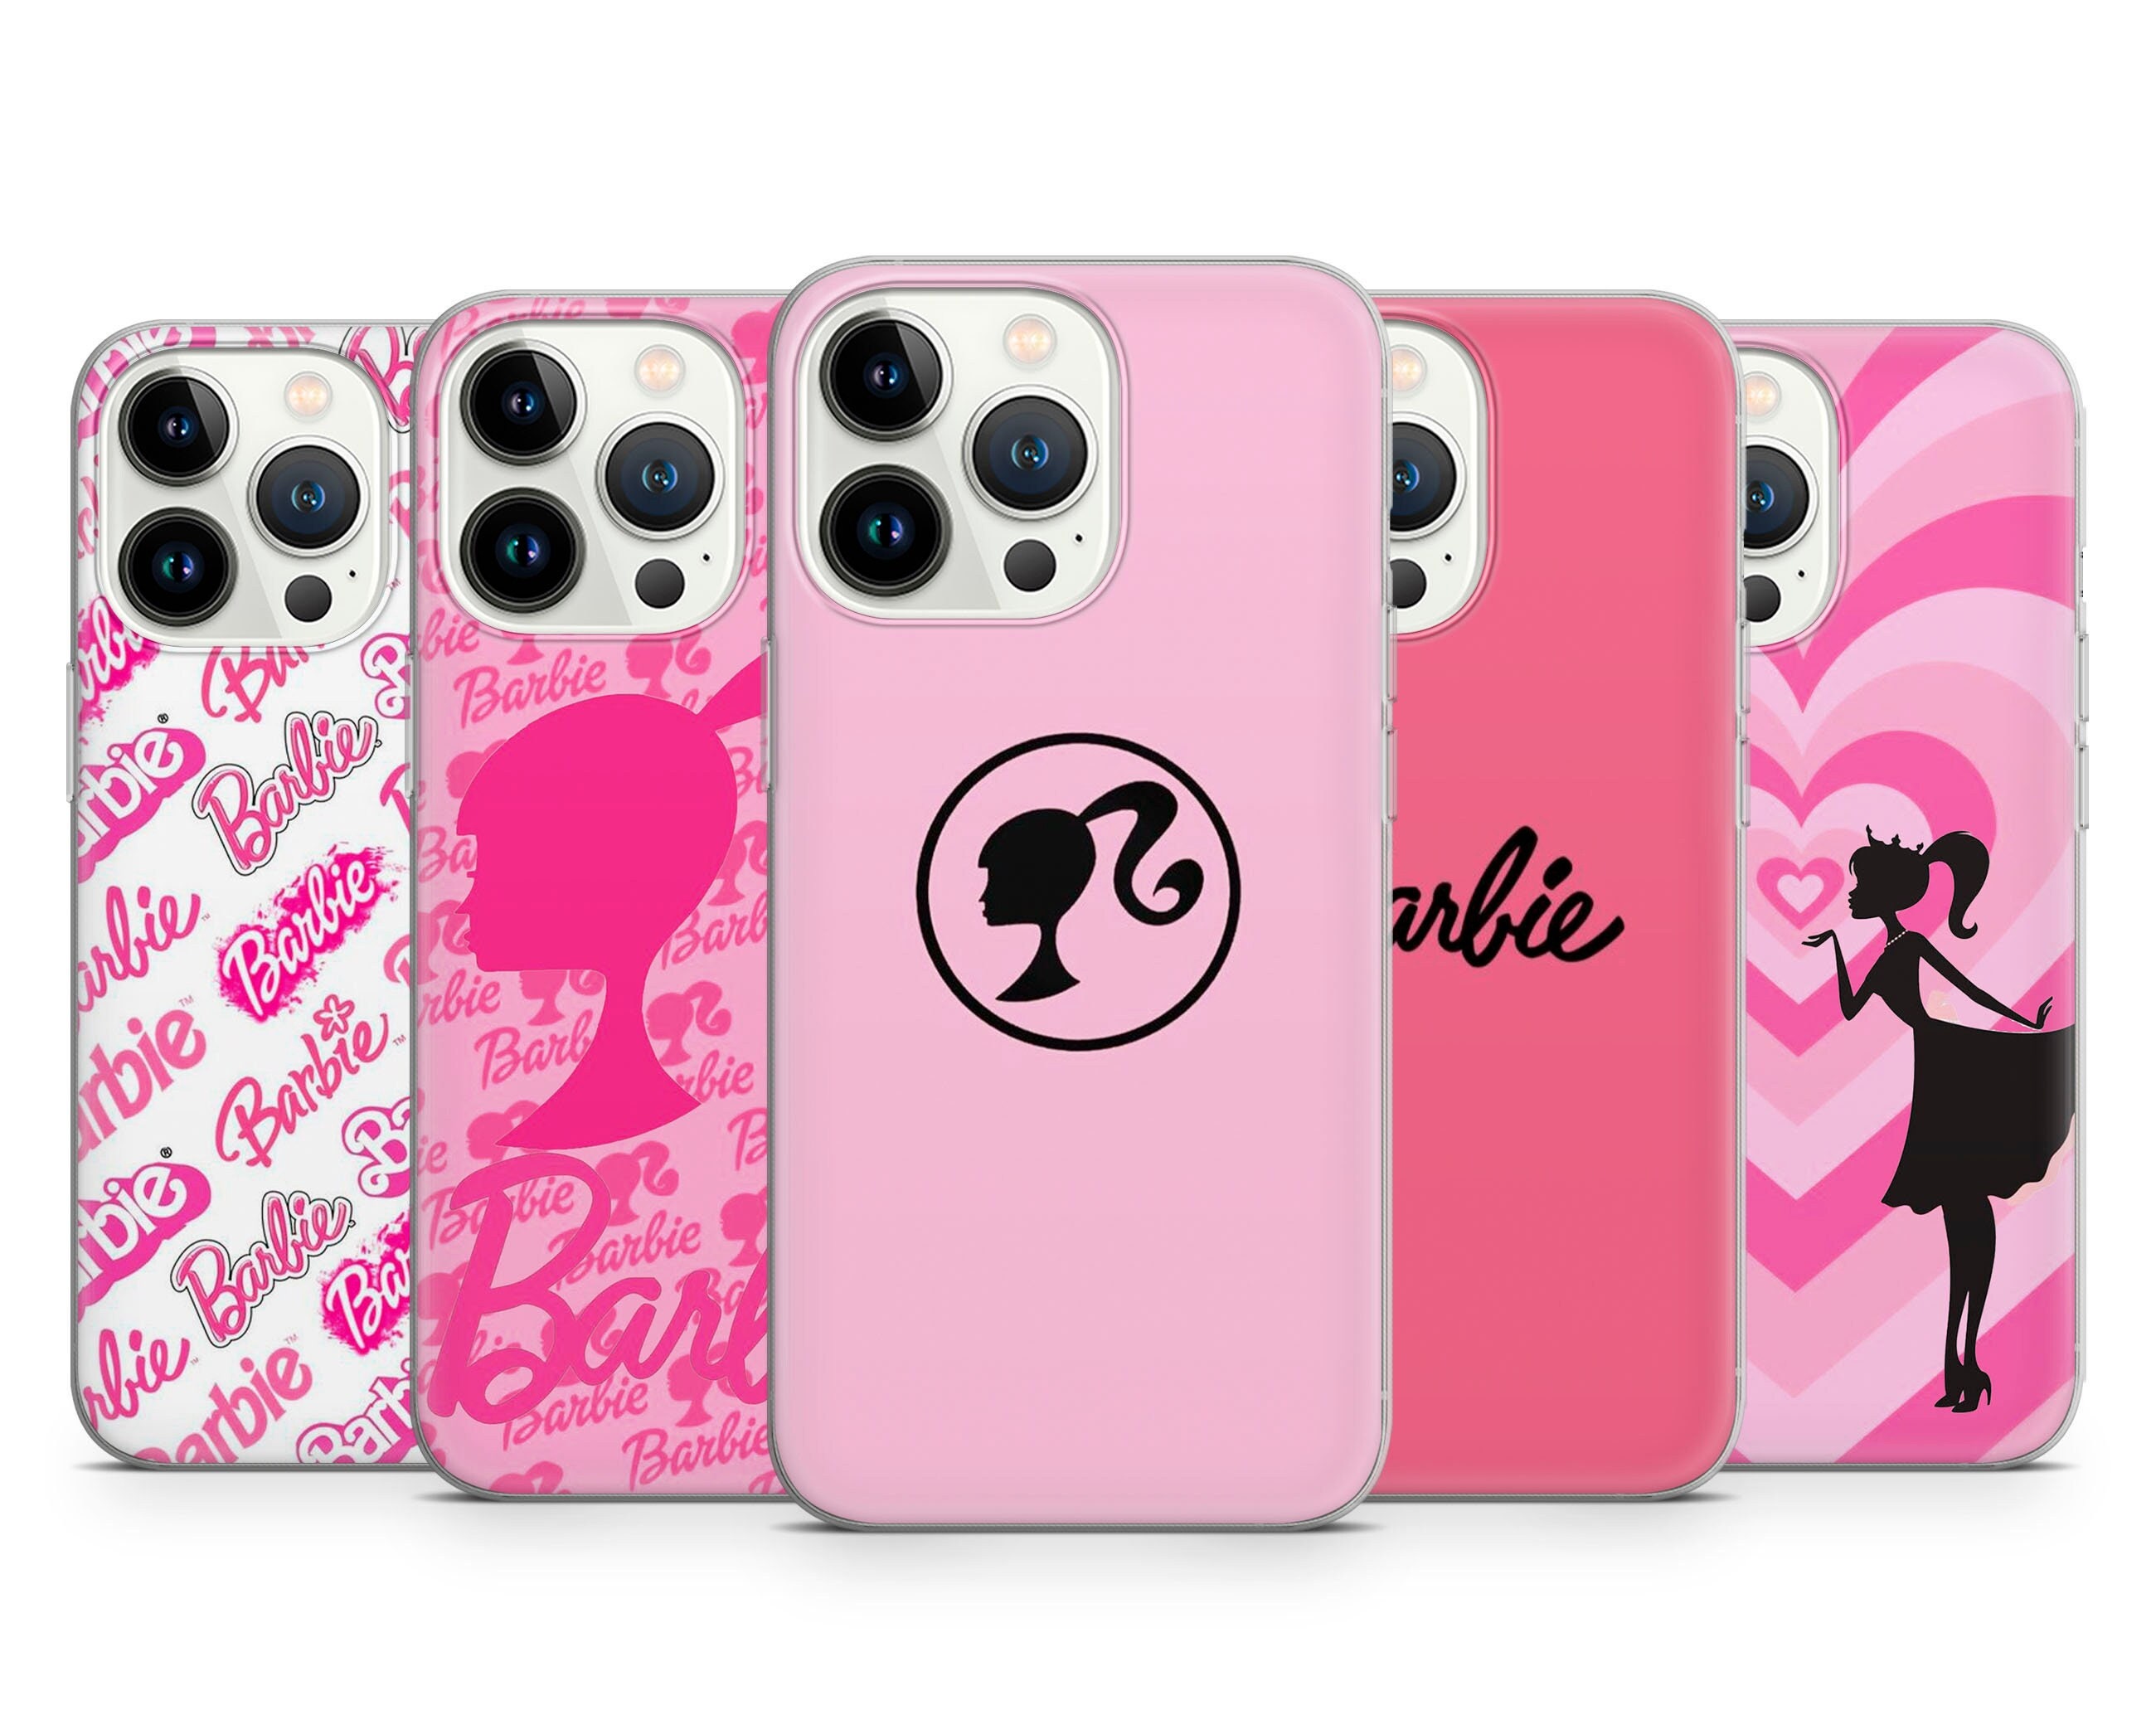 Funda Oficial de Mattel Barbie Stickers Brillantina Reforzada para iPhone 11